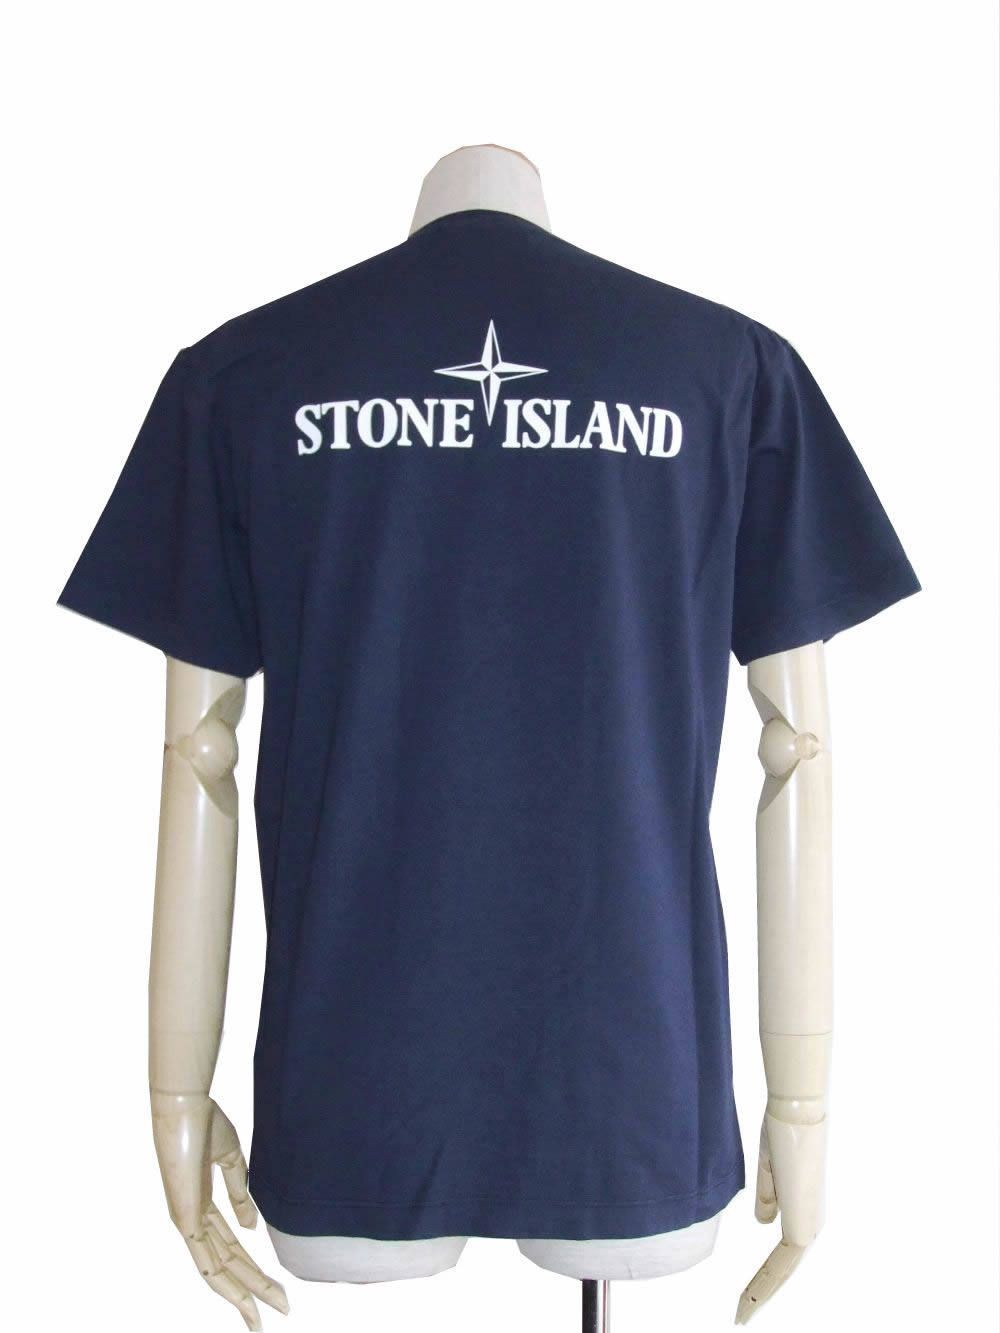 STONE ISLAND - INSTITUTIONAL プリント クルーネック Tシャツ (NAVY